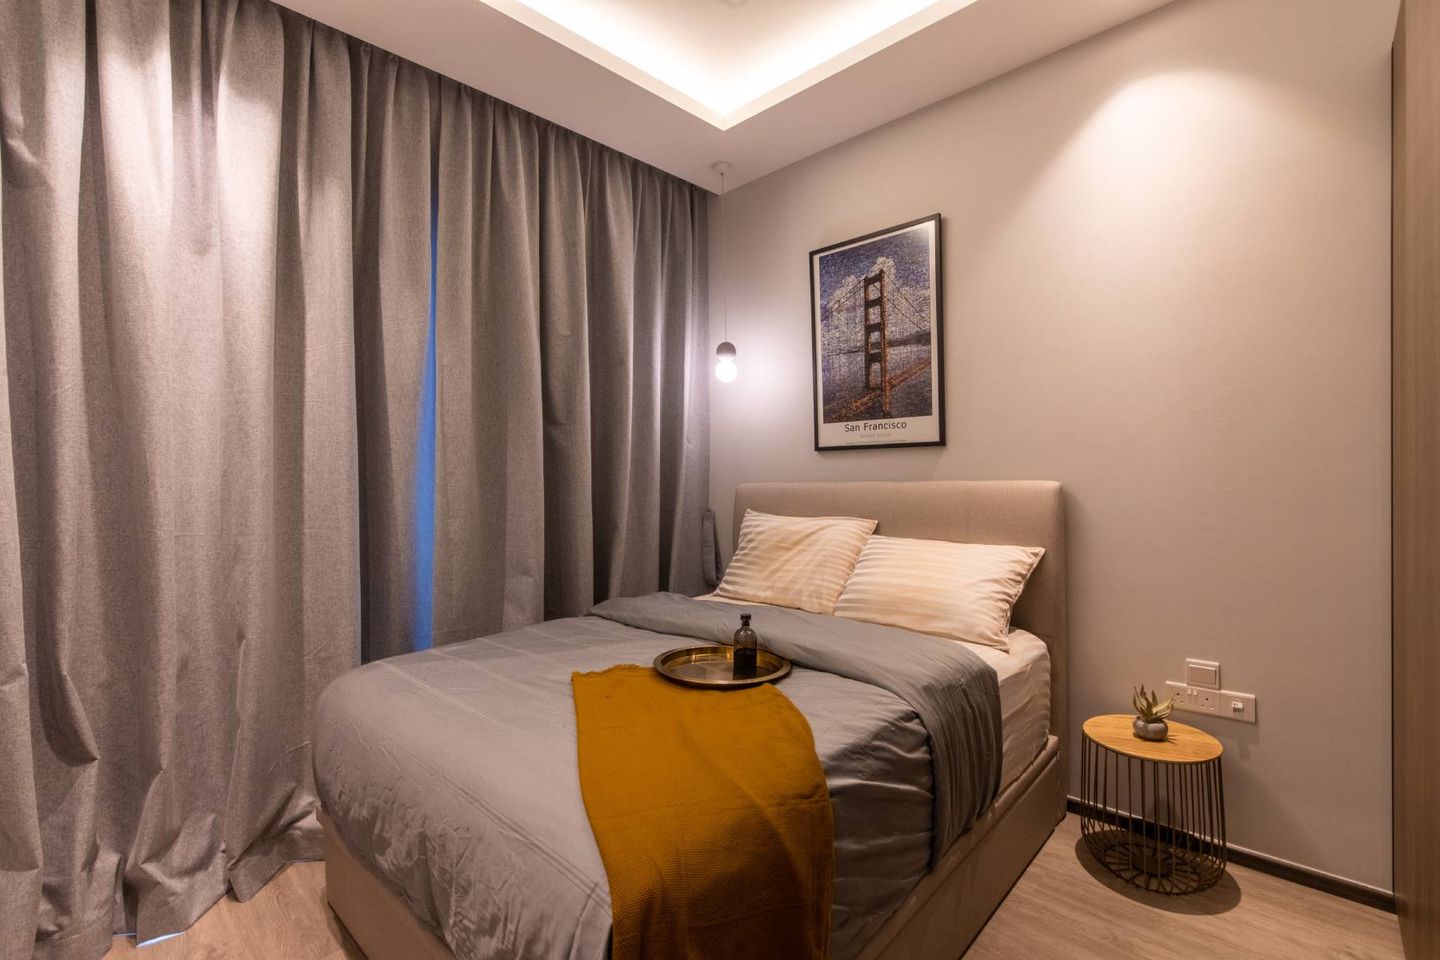 Bedroom Design With L-Shaped Lighting - Livspace